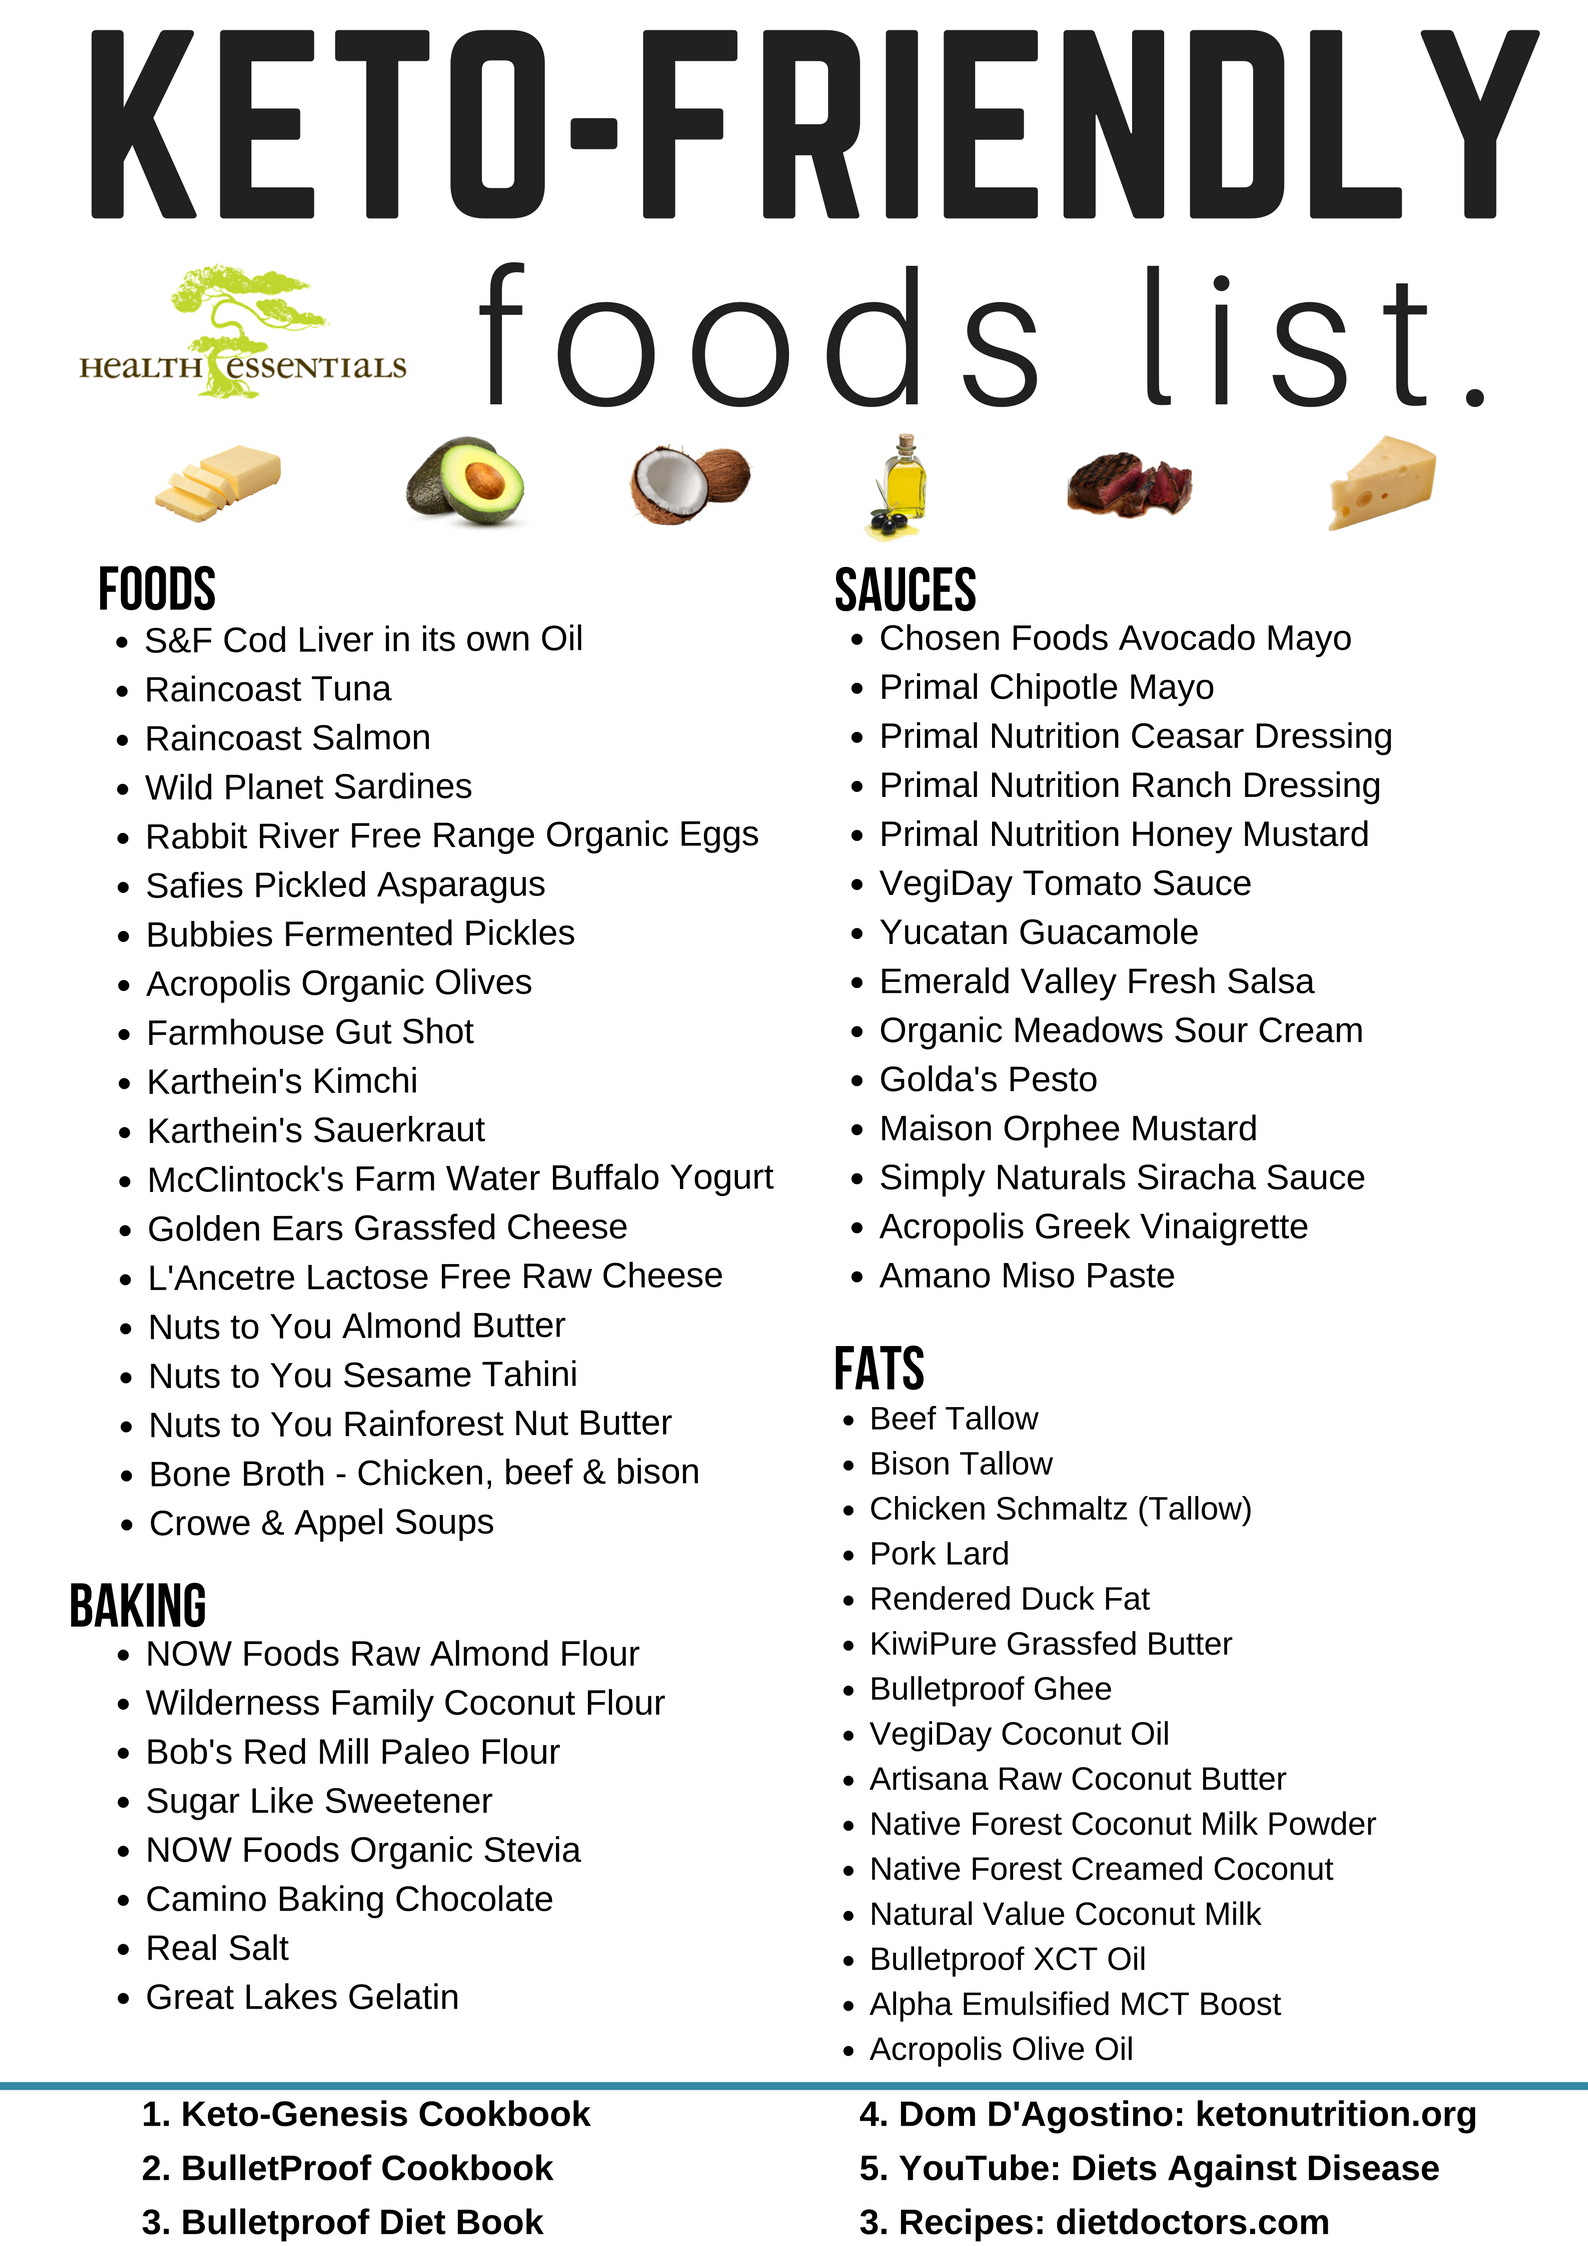 ketogenic-foods-list-health-essentials